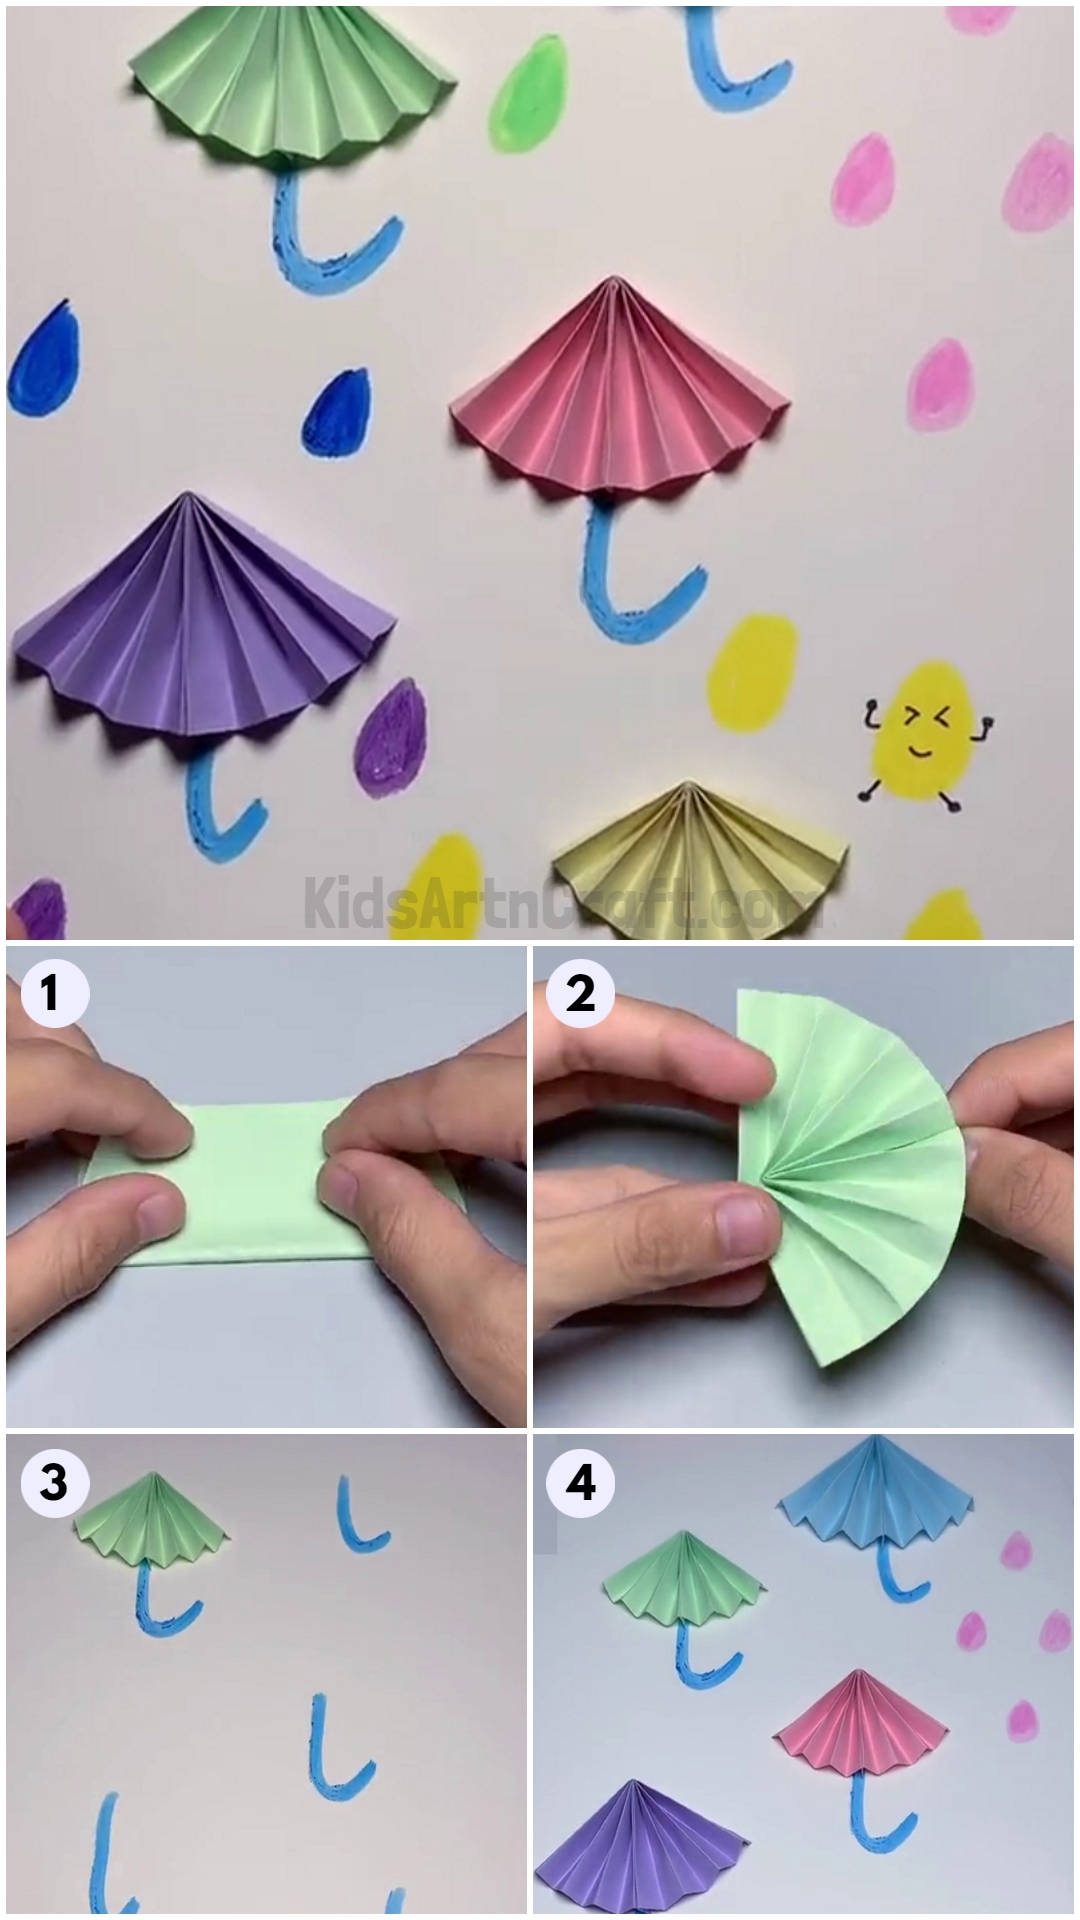 DIY Paper Umbrella Craft Easy Tutorial